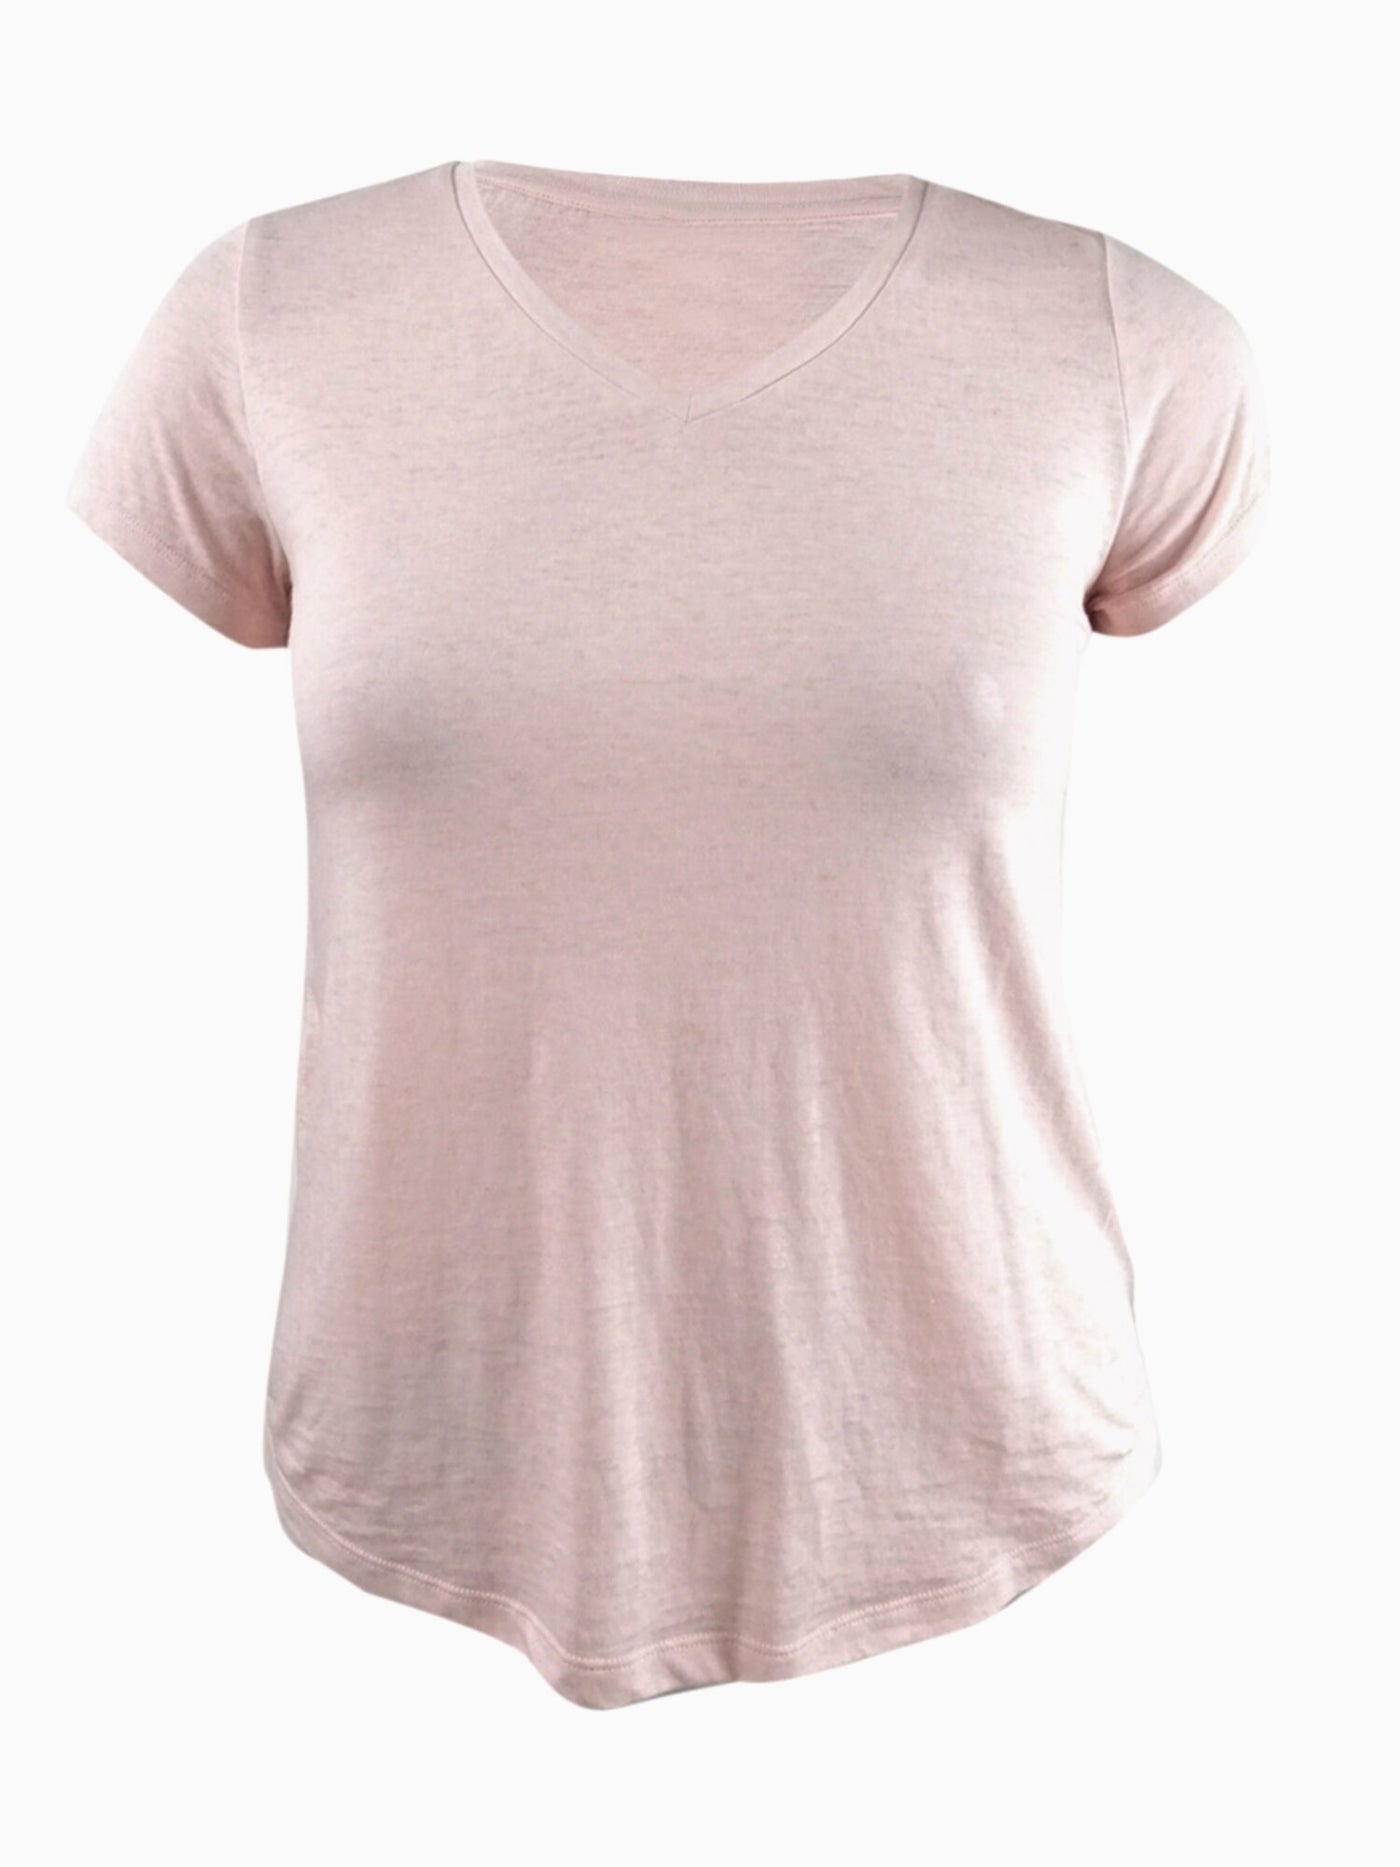 STYLE & COMPANY Womens Pink Short Sleeve V Neck T-Shirt S